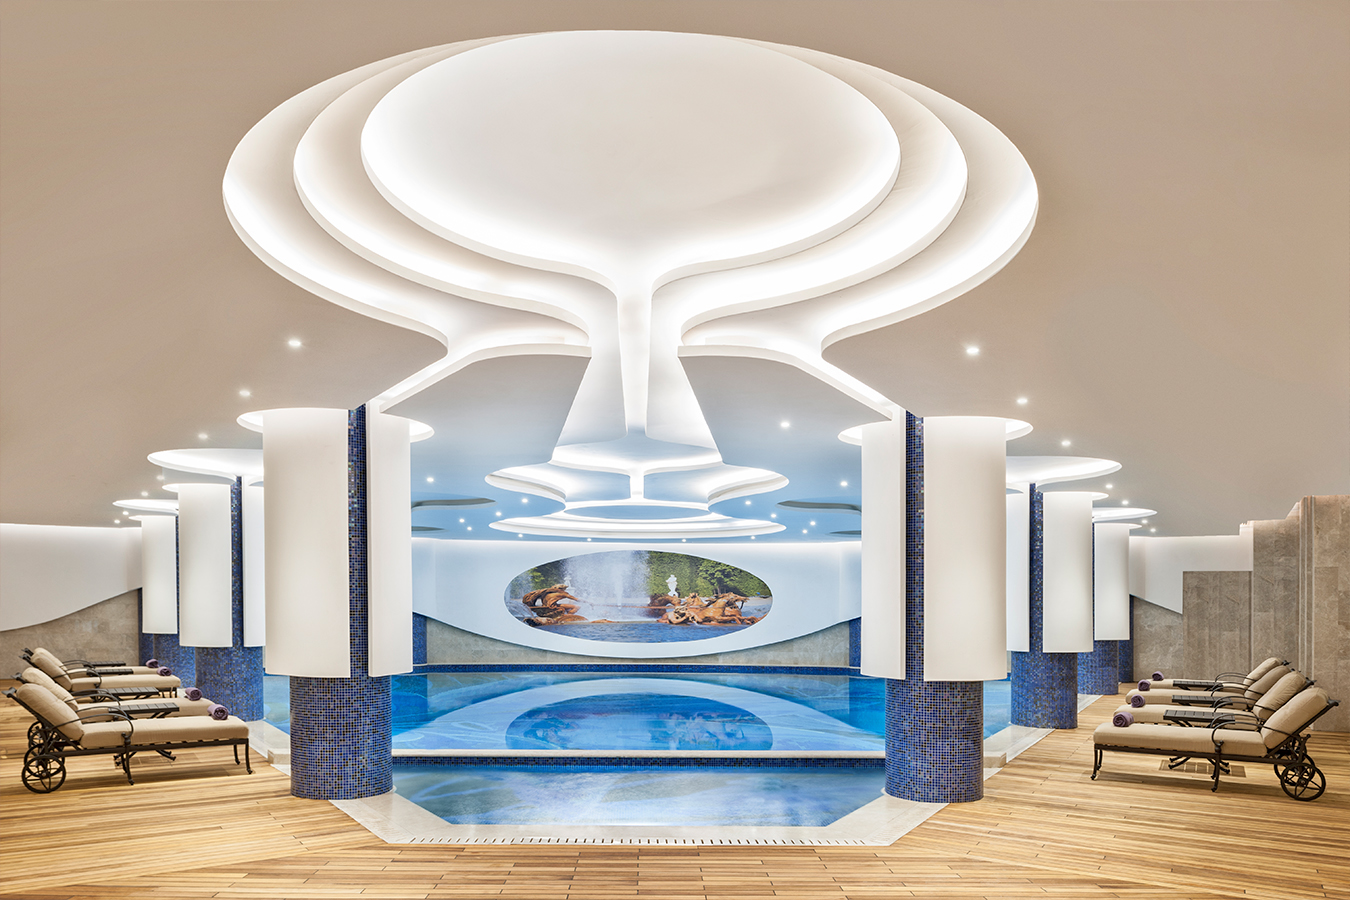 Kaya Palazzo's spa exuding a regal atmosphere